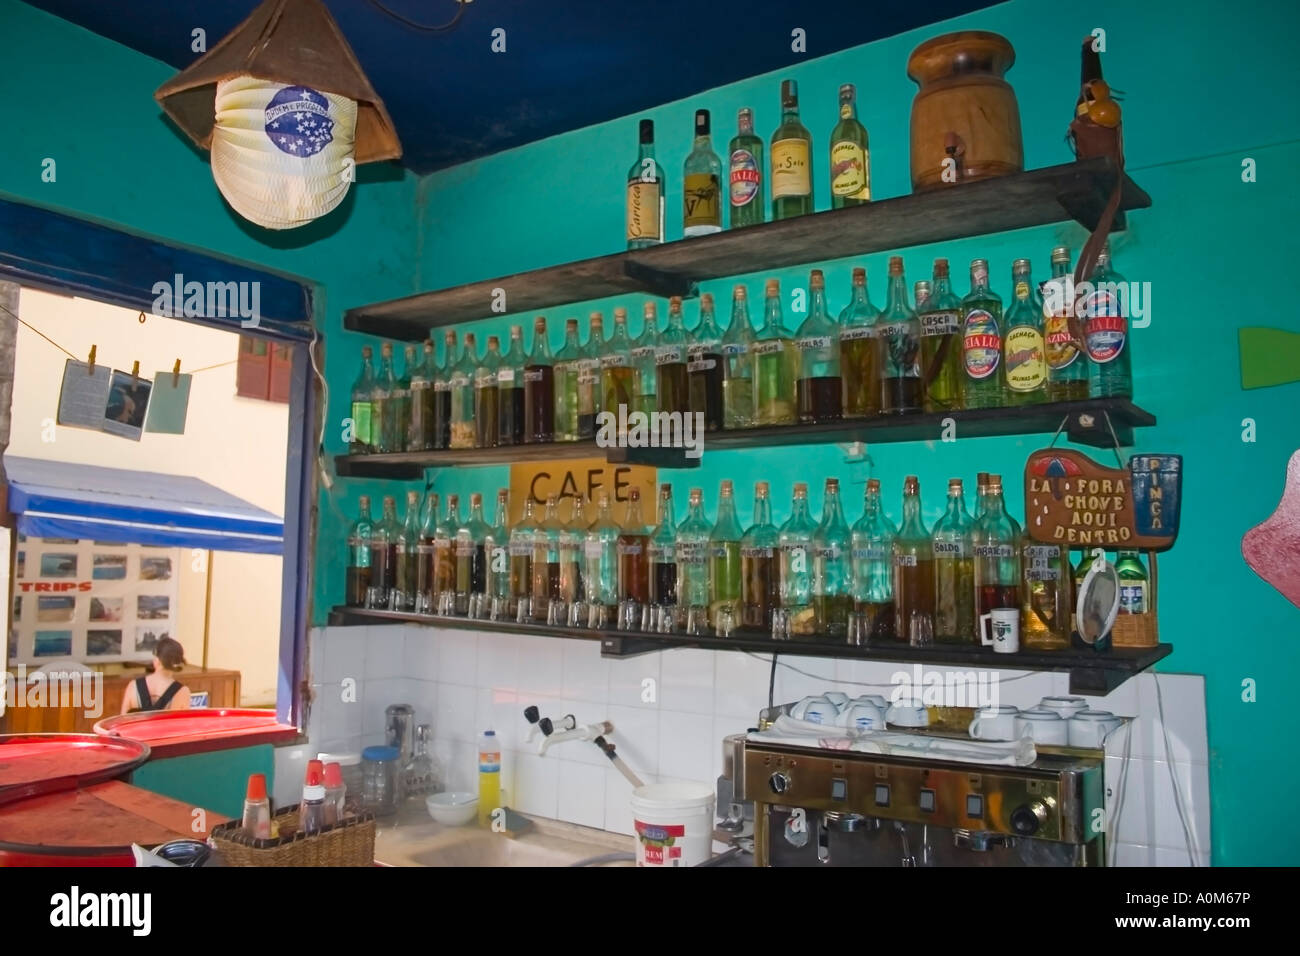 Pituresque cafe featuring dozens of traditional home made drinks Morro de São Paulo state of Bahia Brazil Stock Photo